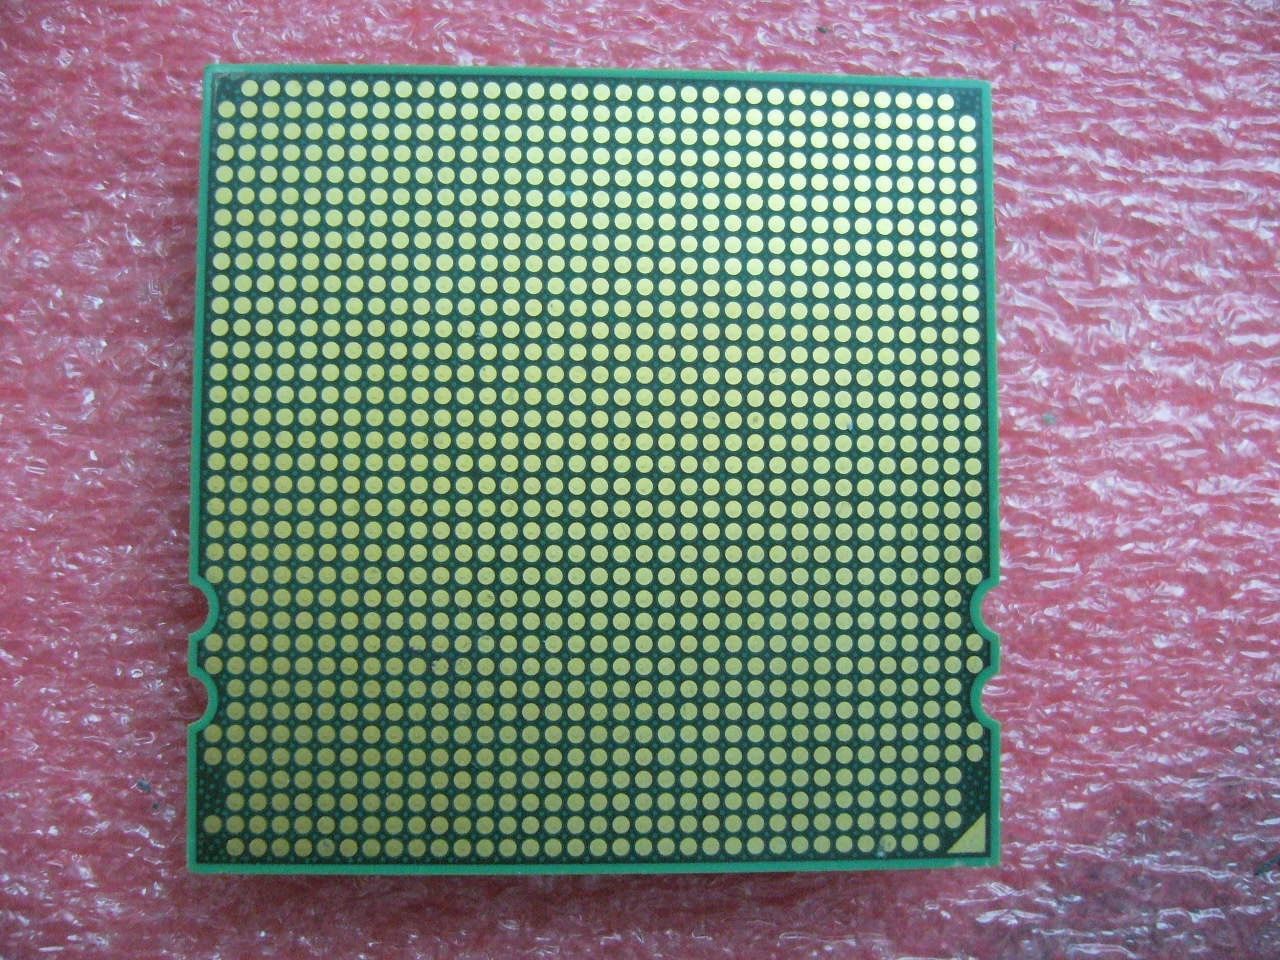 QTY 1x AMD Opteron 2344 HE 1.7 GHz Quad-Core OS2344PAL4BGC CPU Socket F 1207 - Click Image to Close